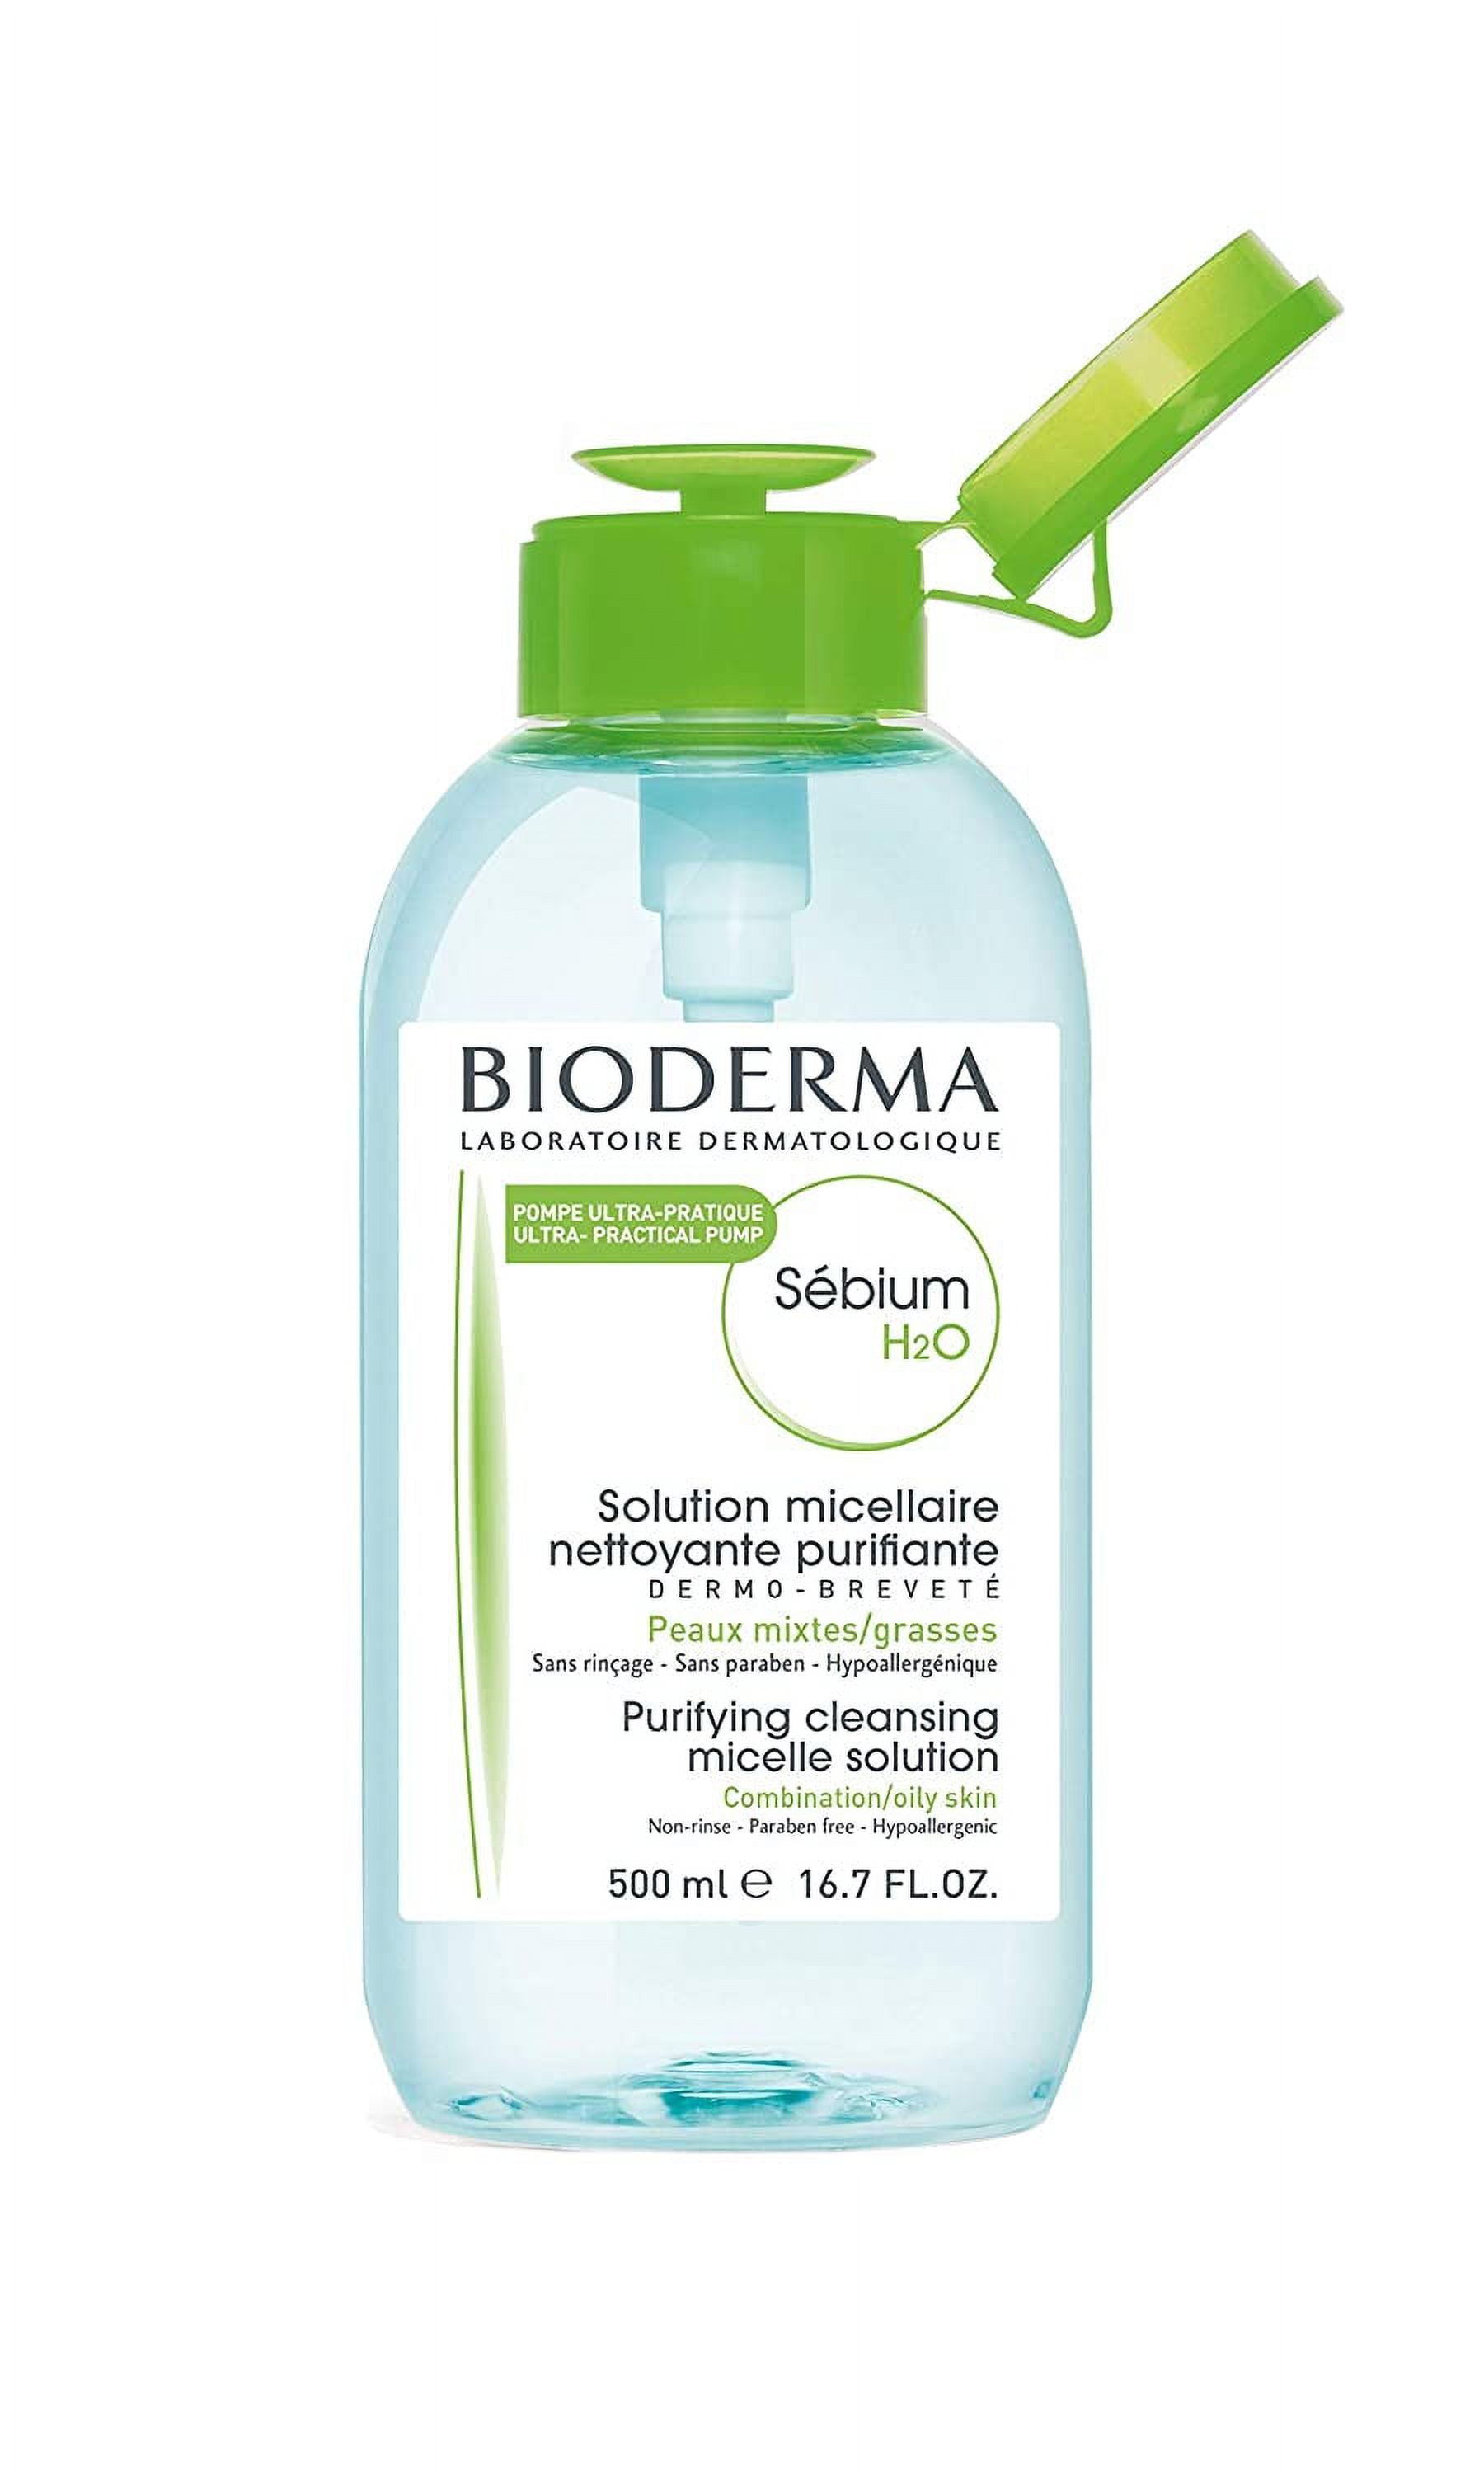 Agua Micelar Bioderma Sebium H2O Frasco X 250mL - Farmacias Cruz Verde